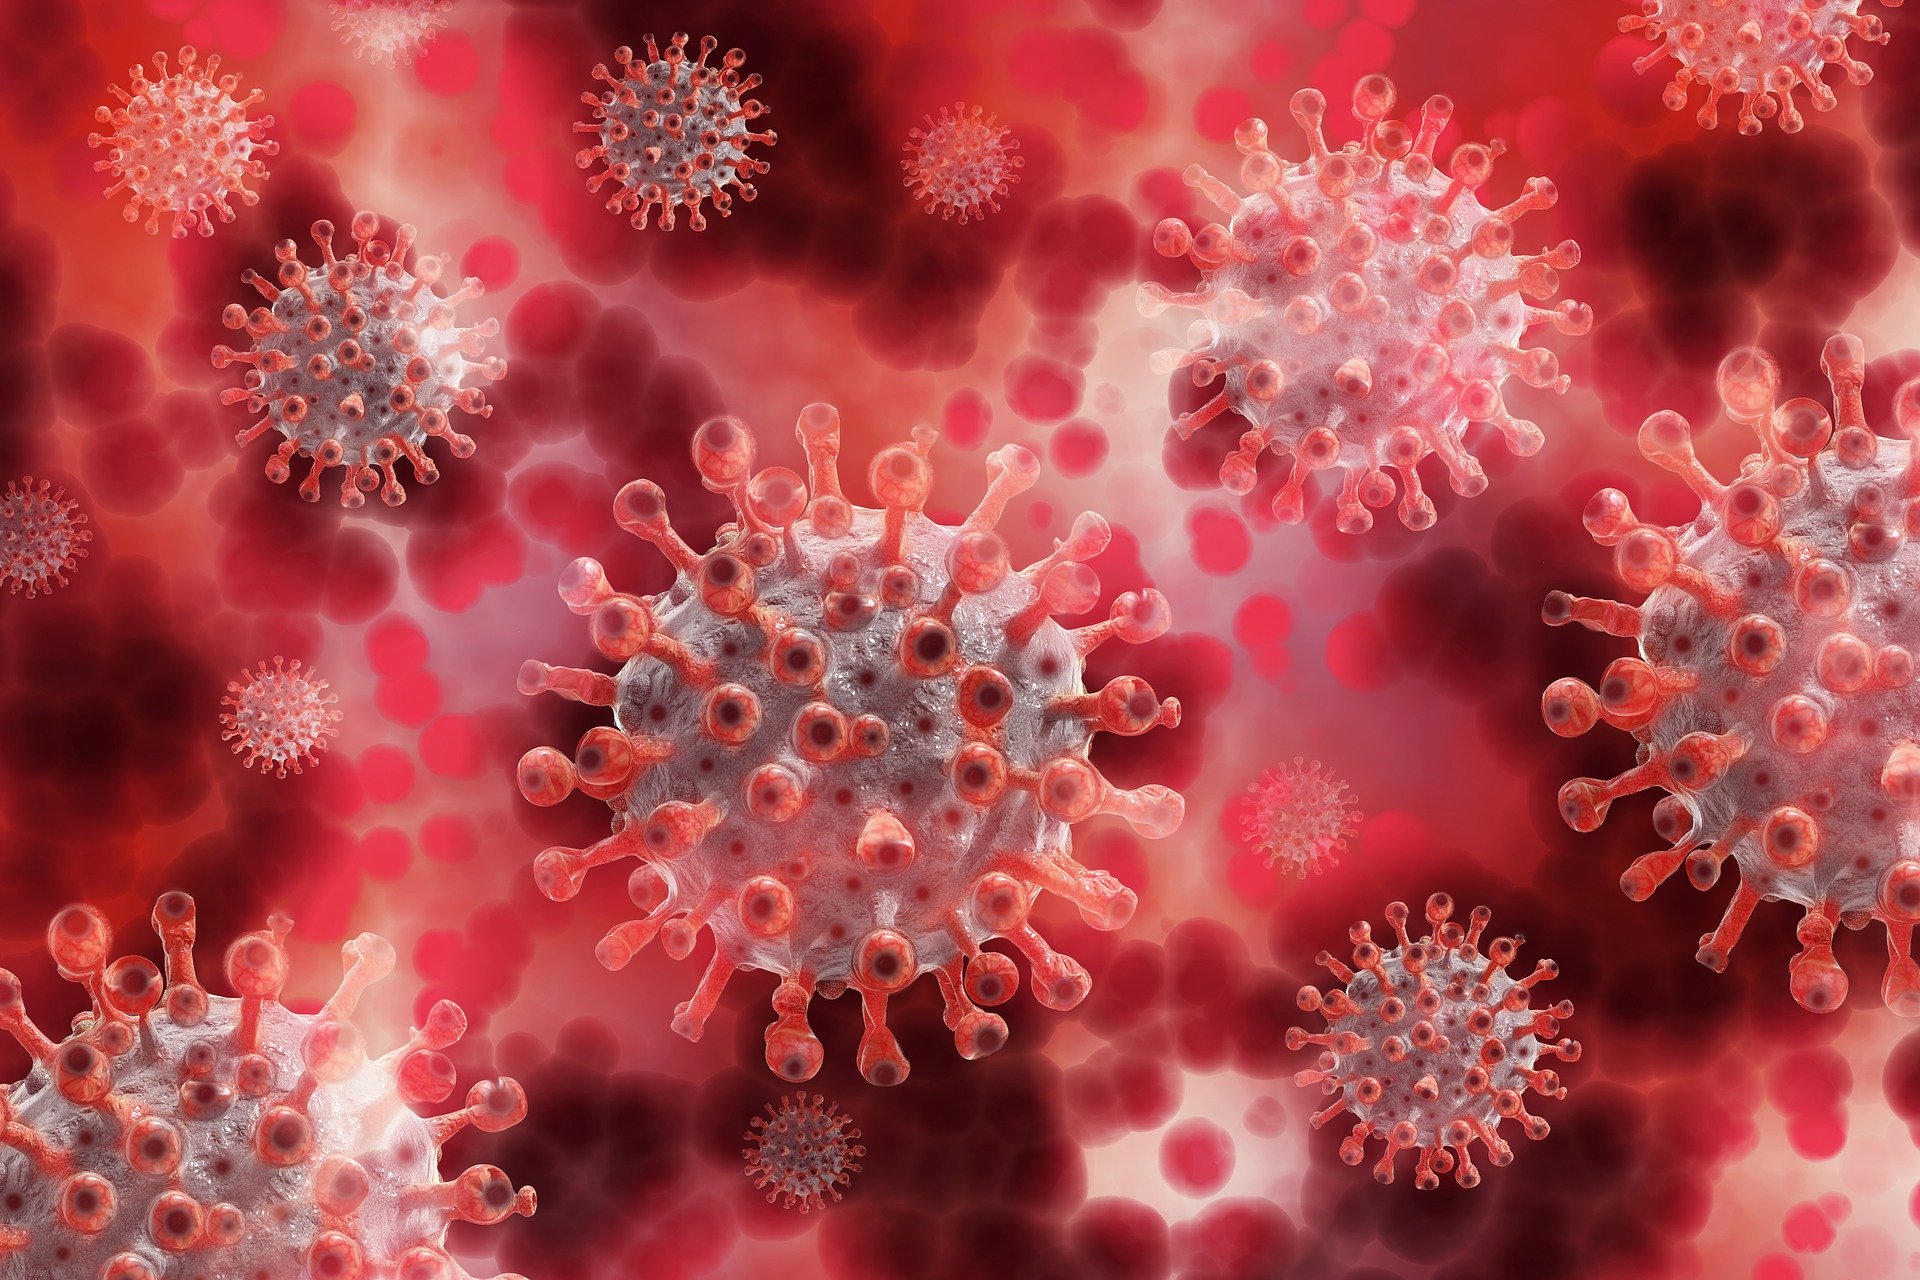 Coronavirus: in Toscana 615 nuovi positivi, età media 37 anni. Cinque i decessi